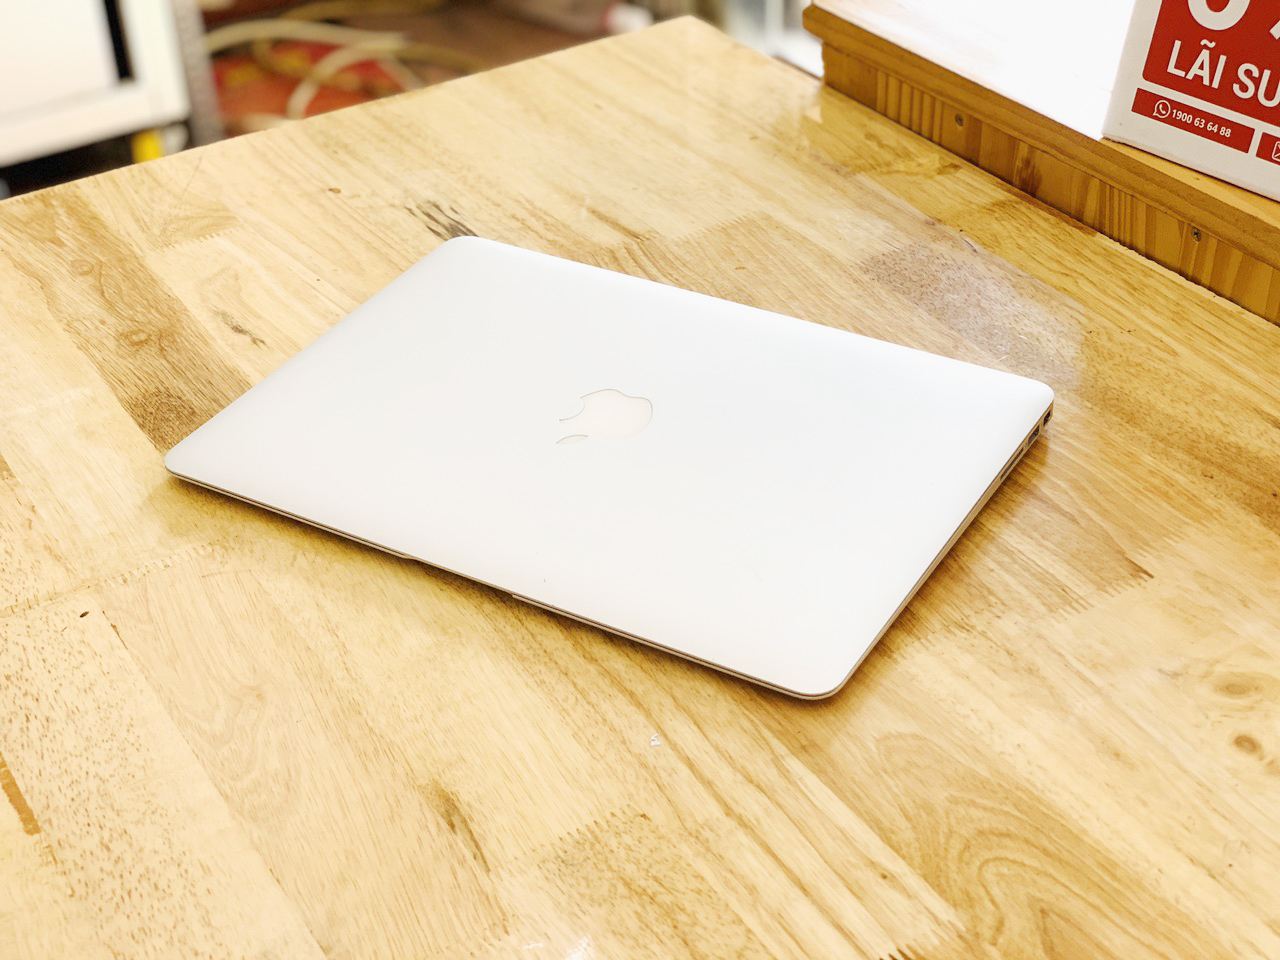 Macbook Air 2015 i5